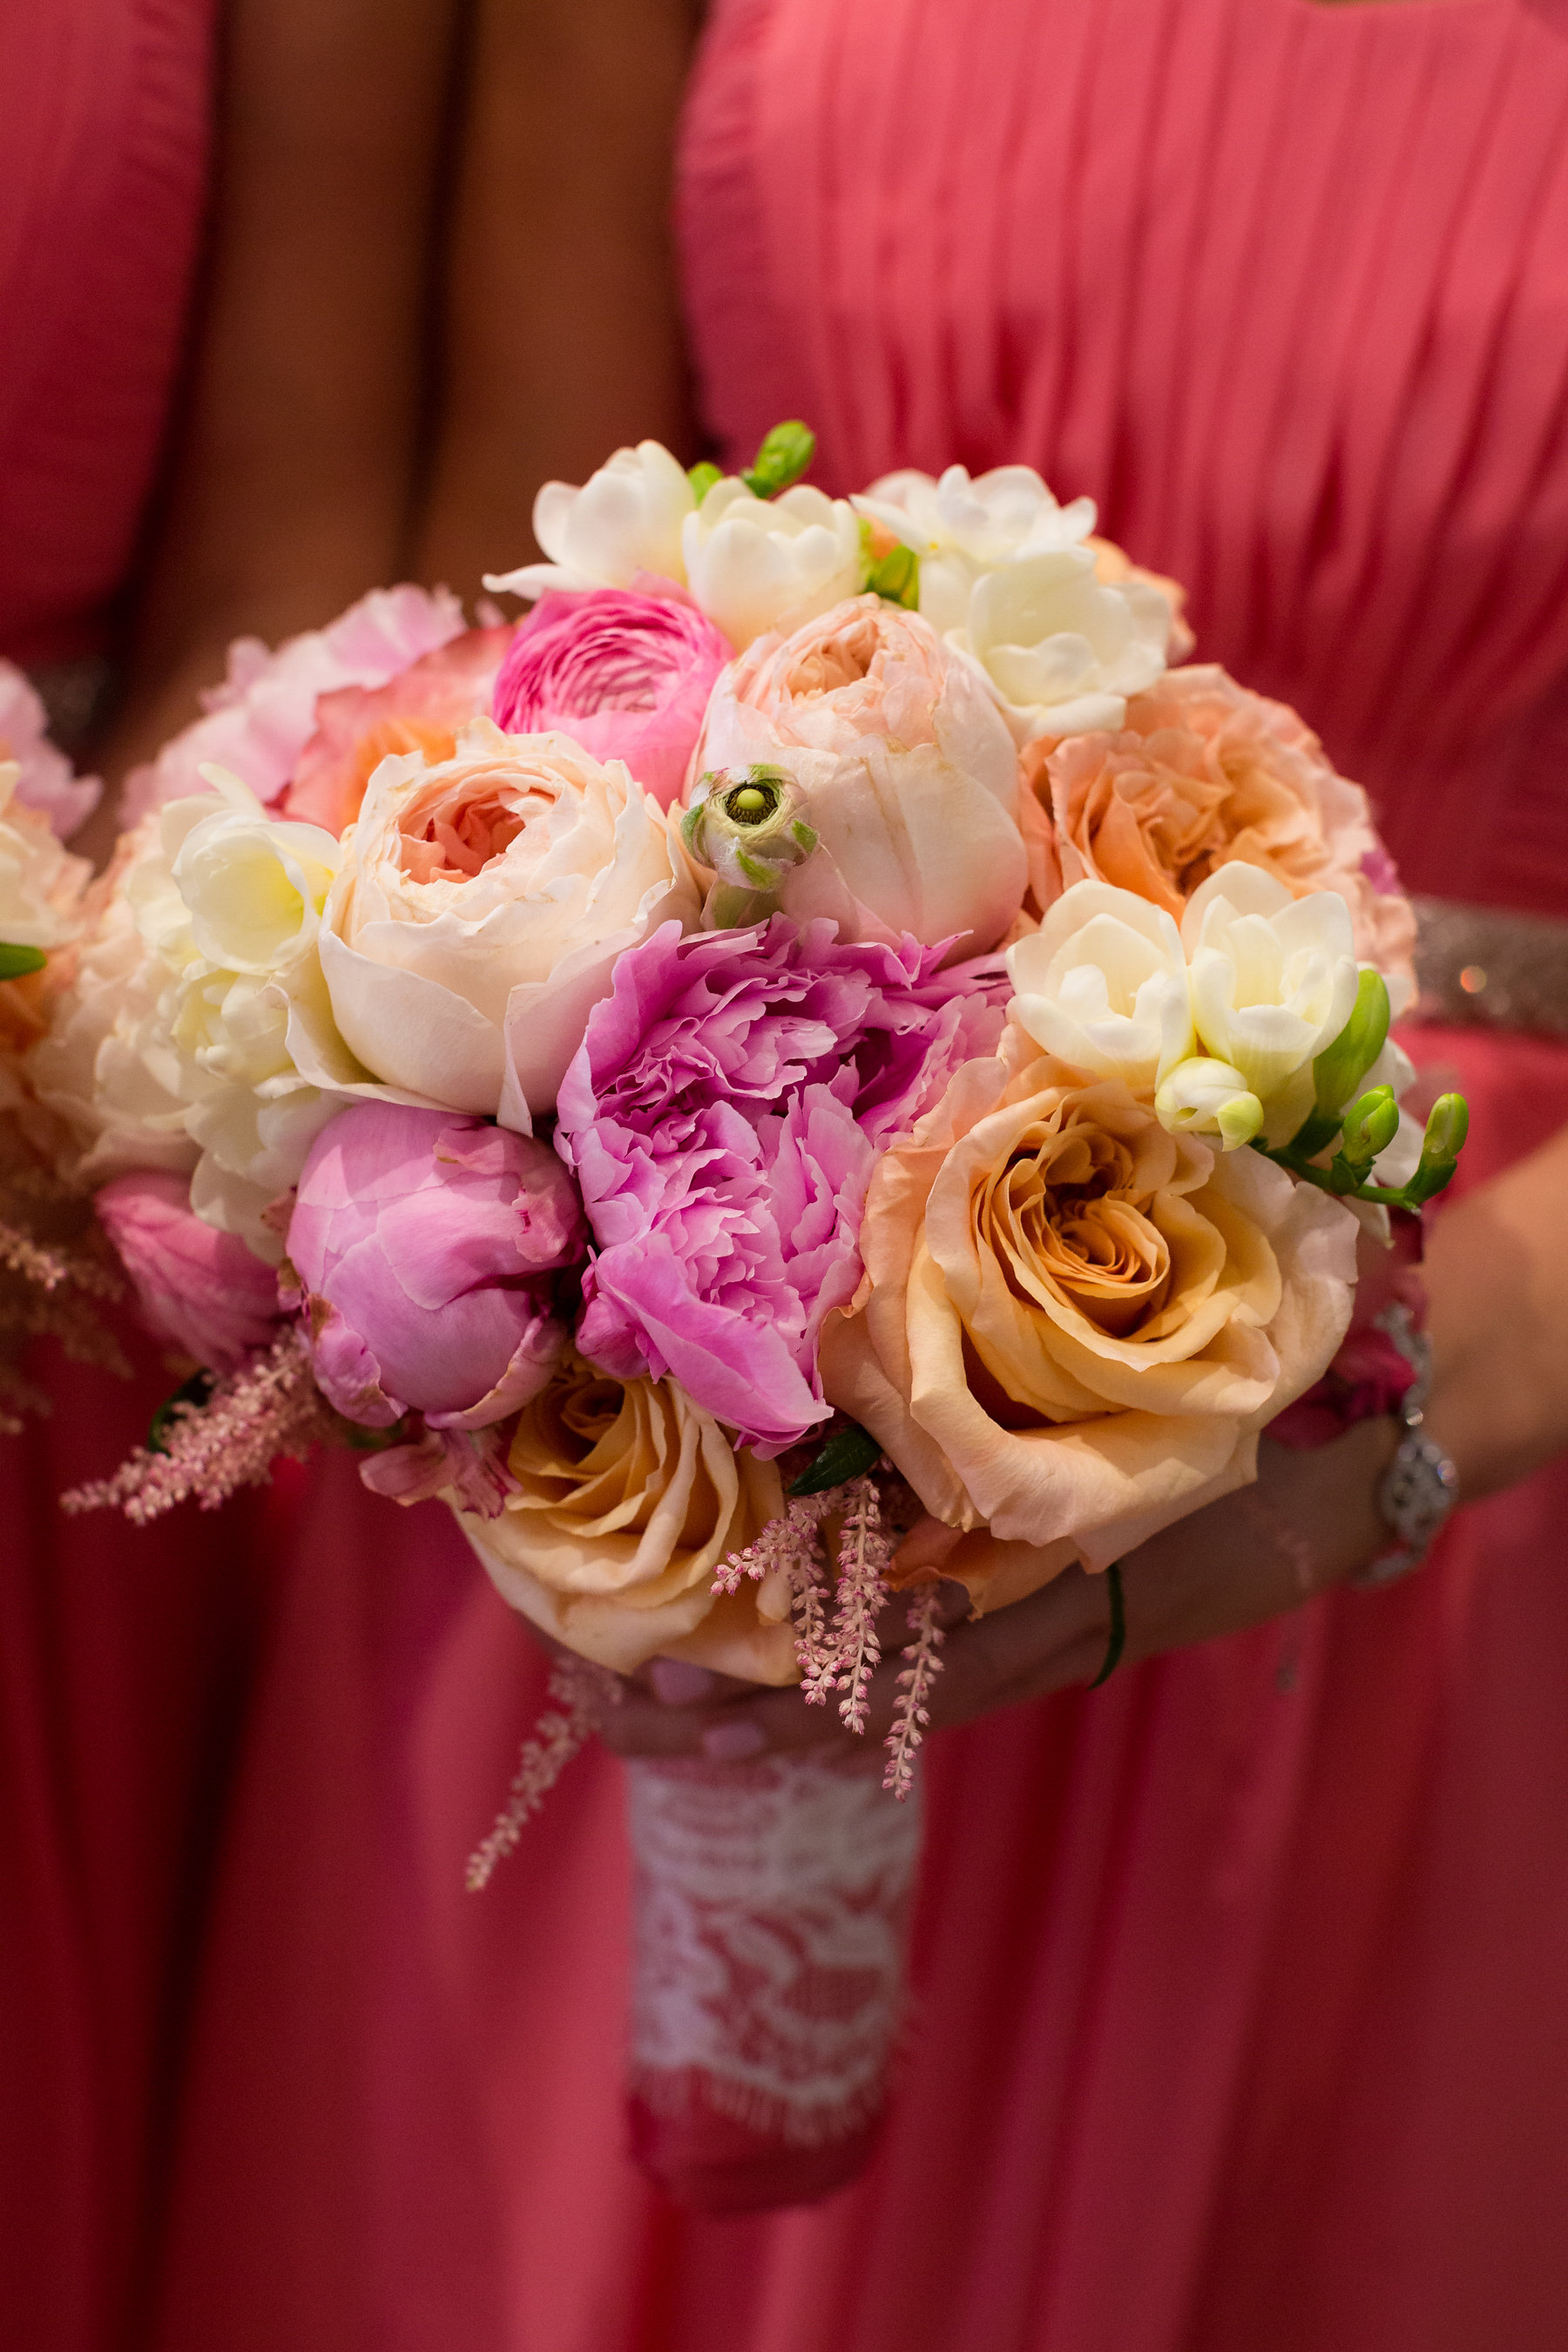 Cute bridesmaid bouquet with a summer colors palette